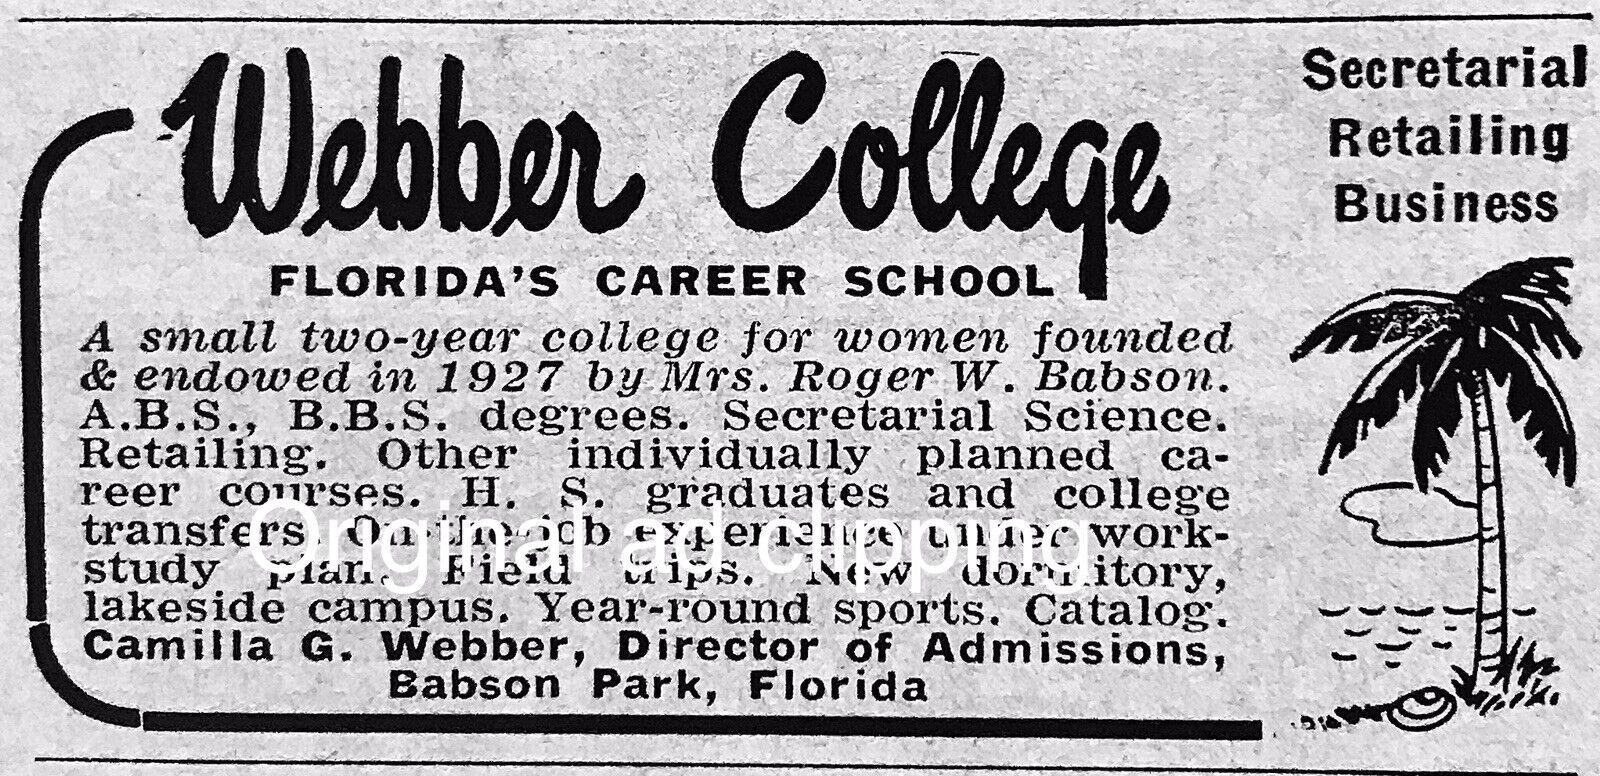 1957 Webber College Florida Women’s Careers PRINT AD 2” Vintage PROMO